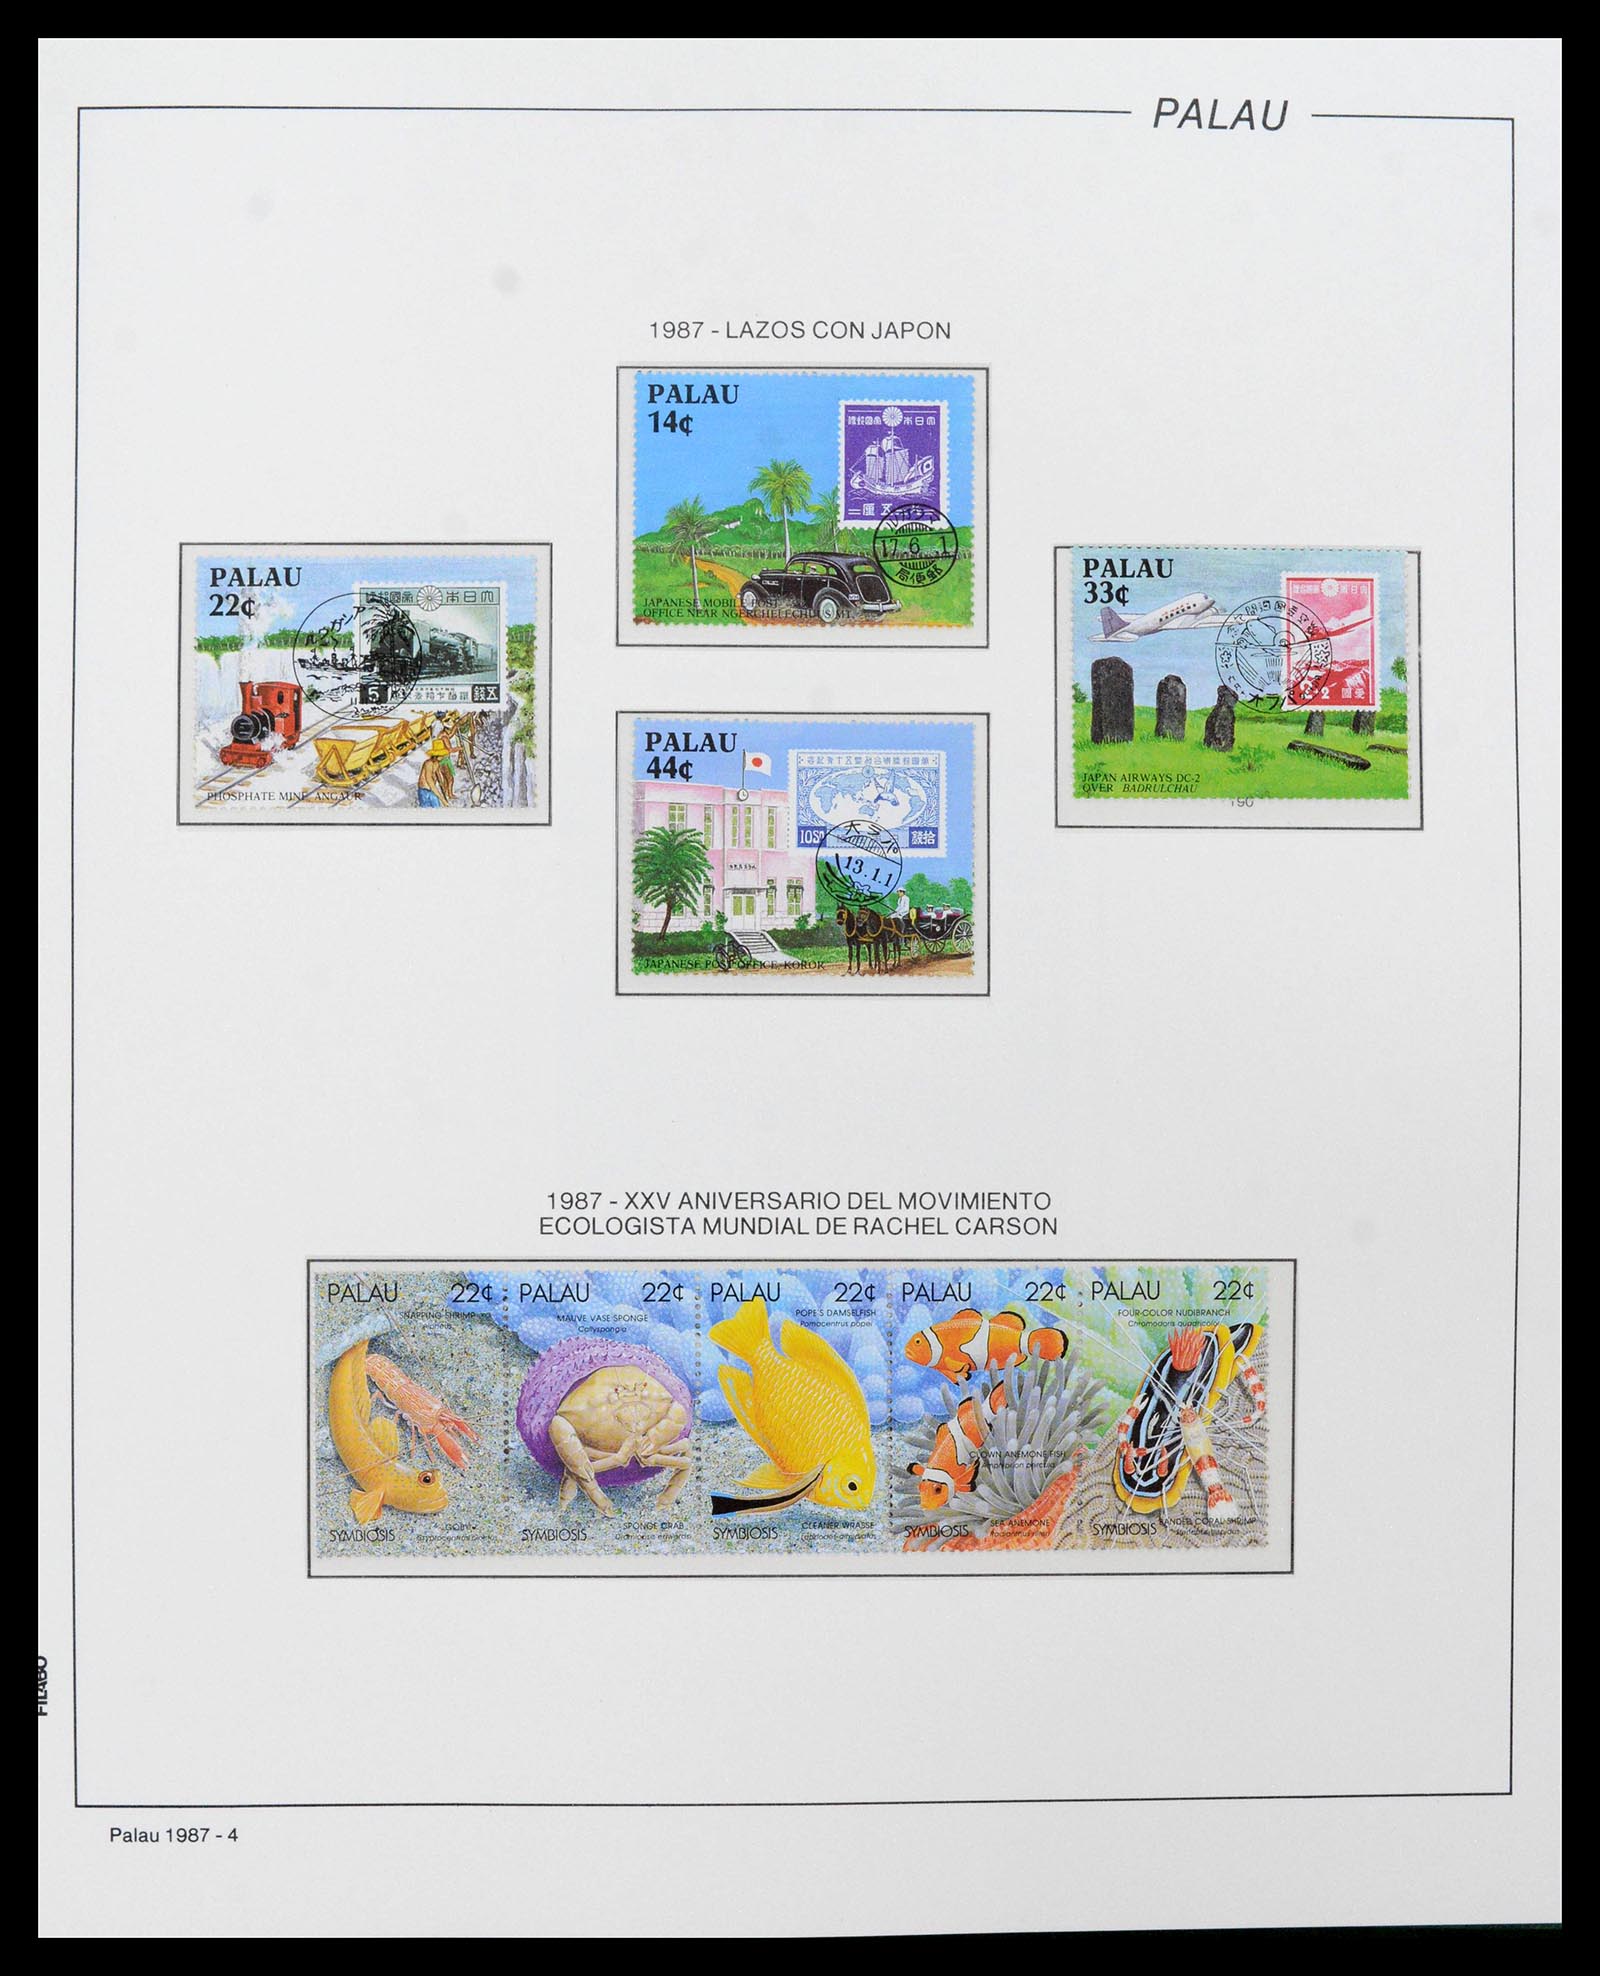 39222 0017 - Stamp collection 39222 Palau, Micronesia and Marshall islands 1980-1995.